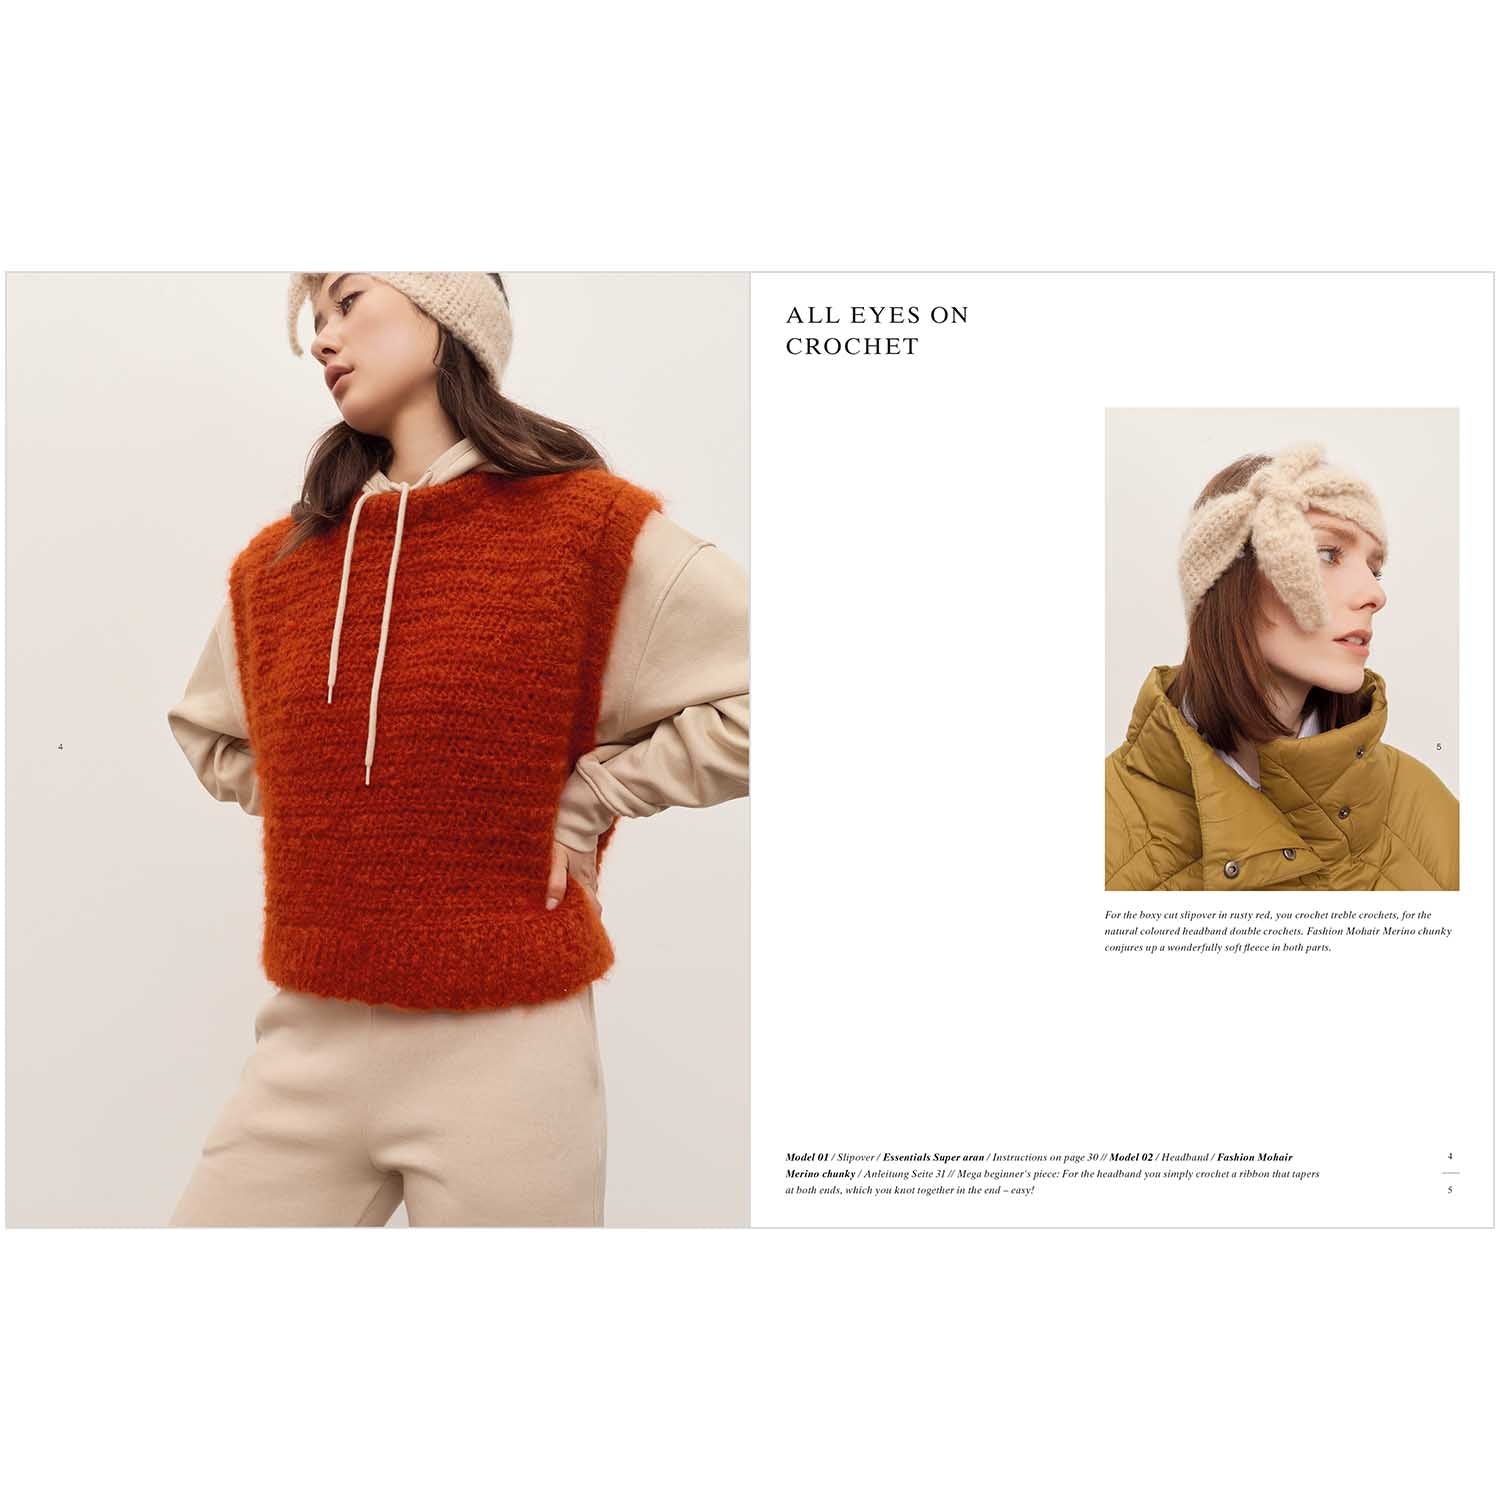 Rico Design Winter Edition Crochet Collection